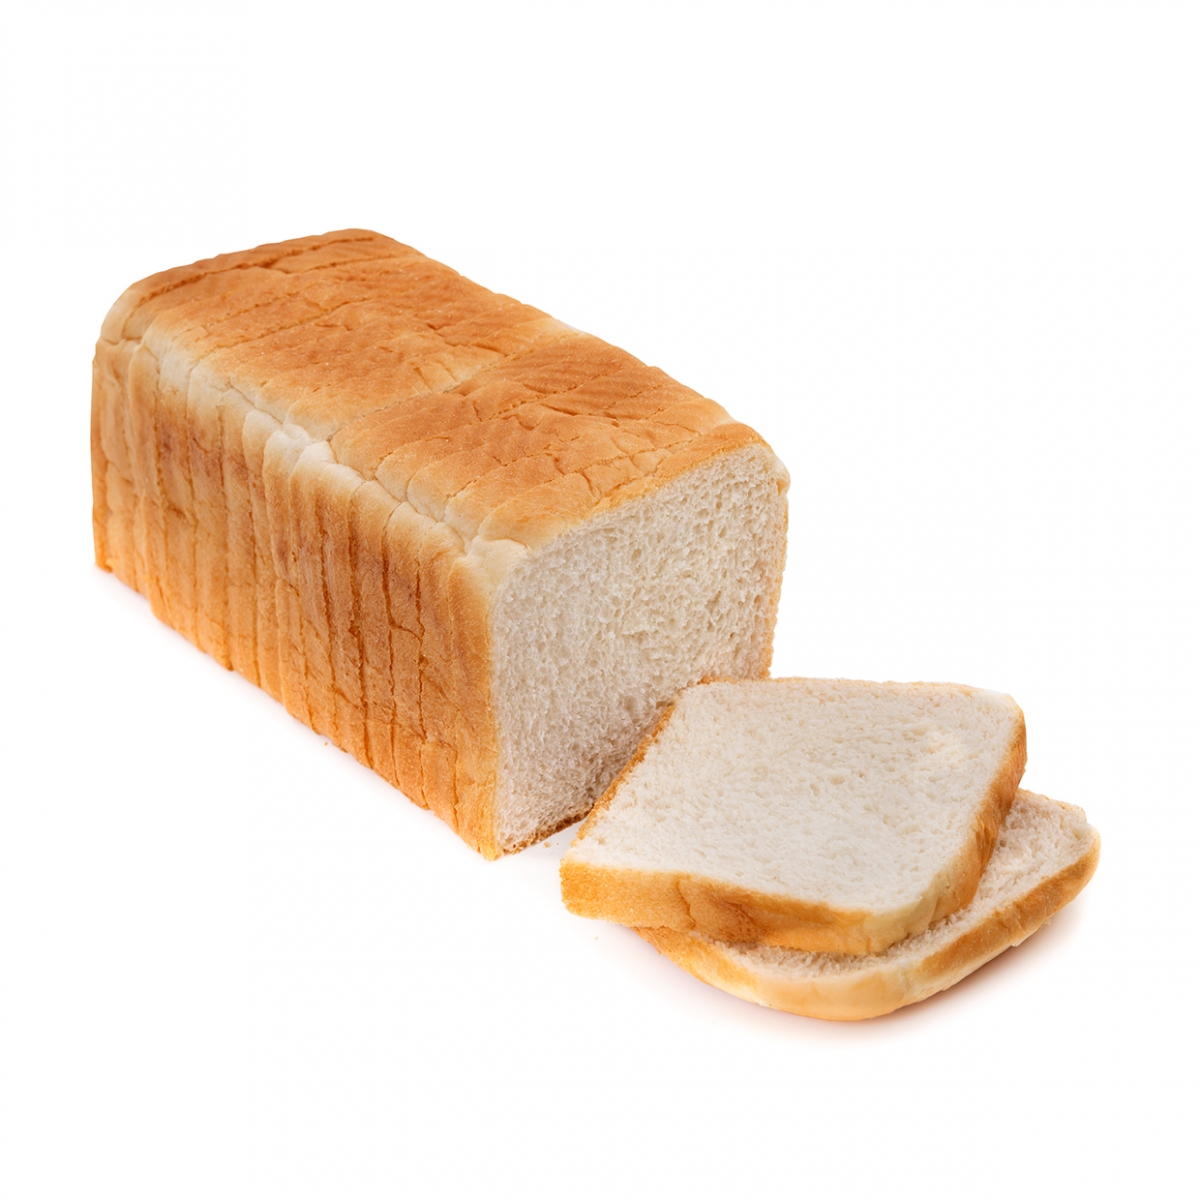 Imagen en la que se ve un pan de molde